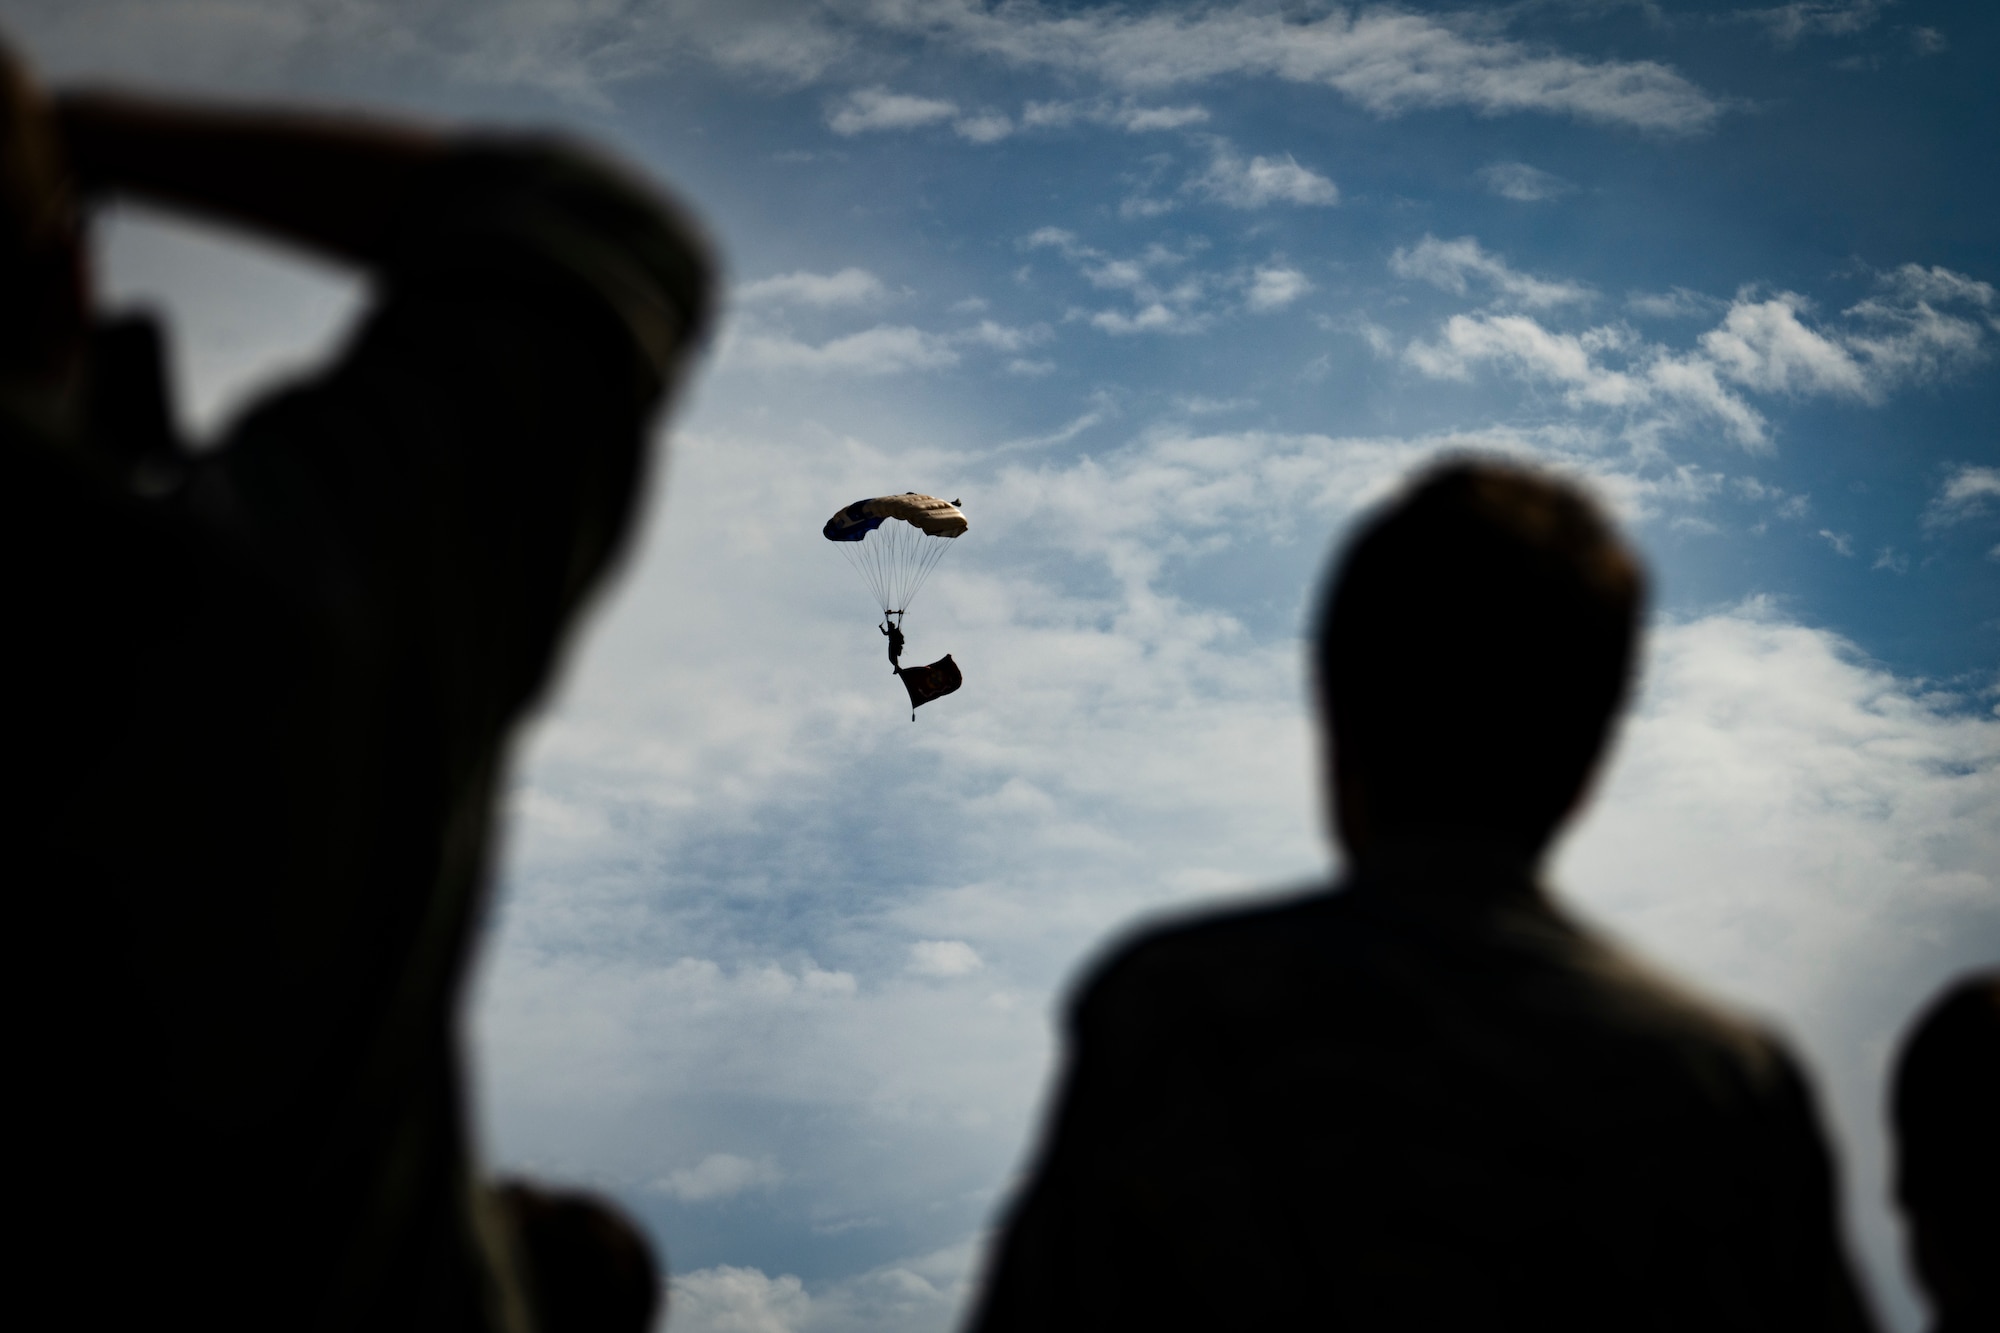 a parachutist descending from the sky